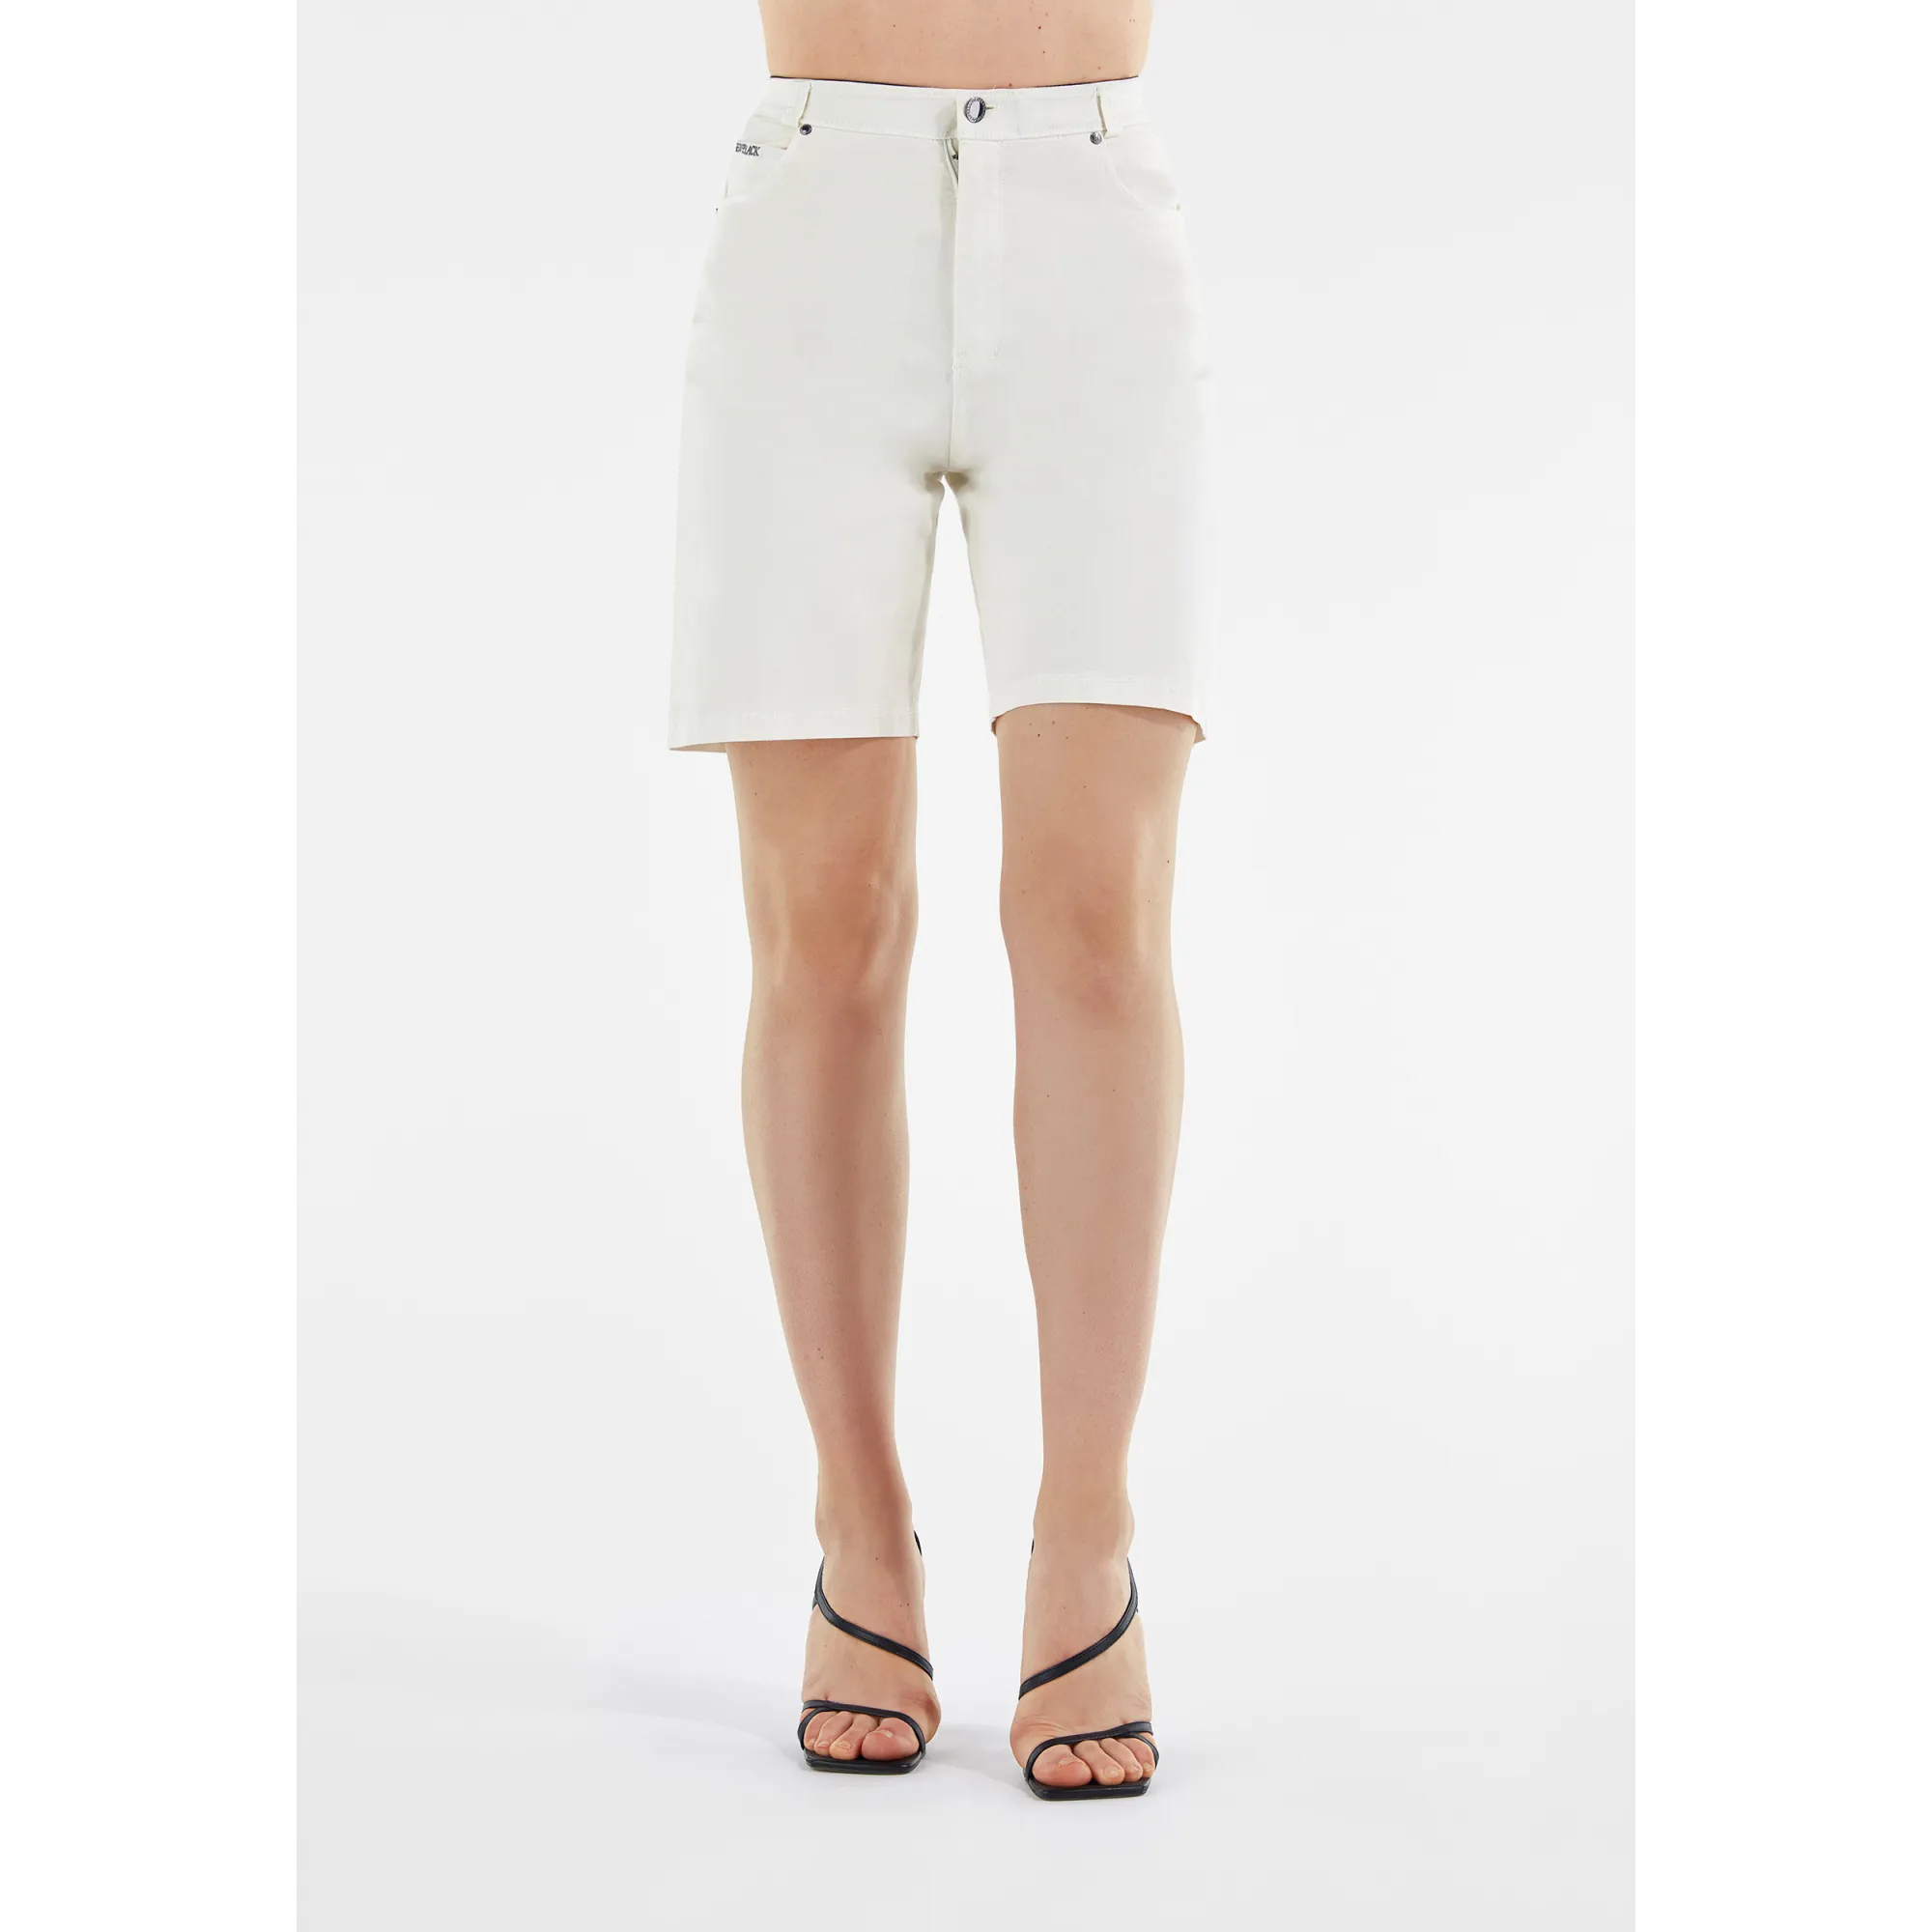 Freddy Damen Fit Jeans - Regular Waist Bermuda Shorts - Distressed Pocket - Creme - W103